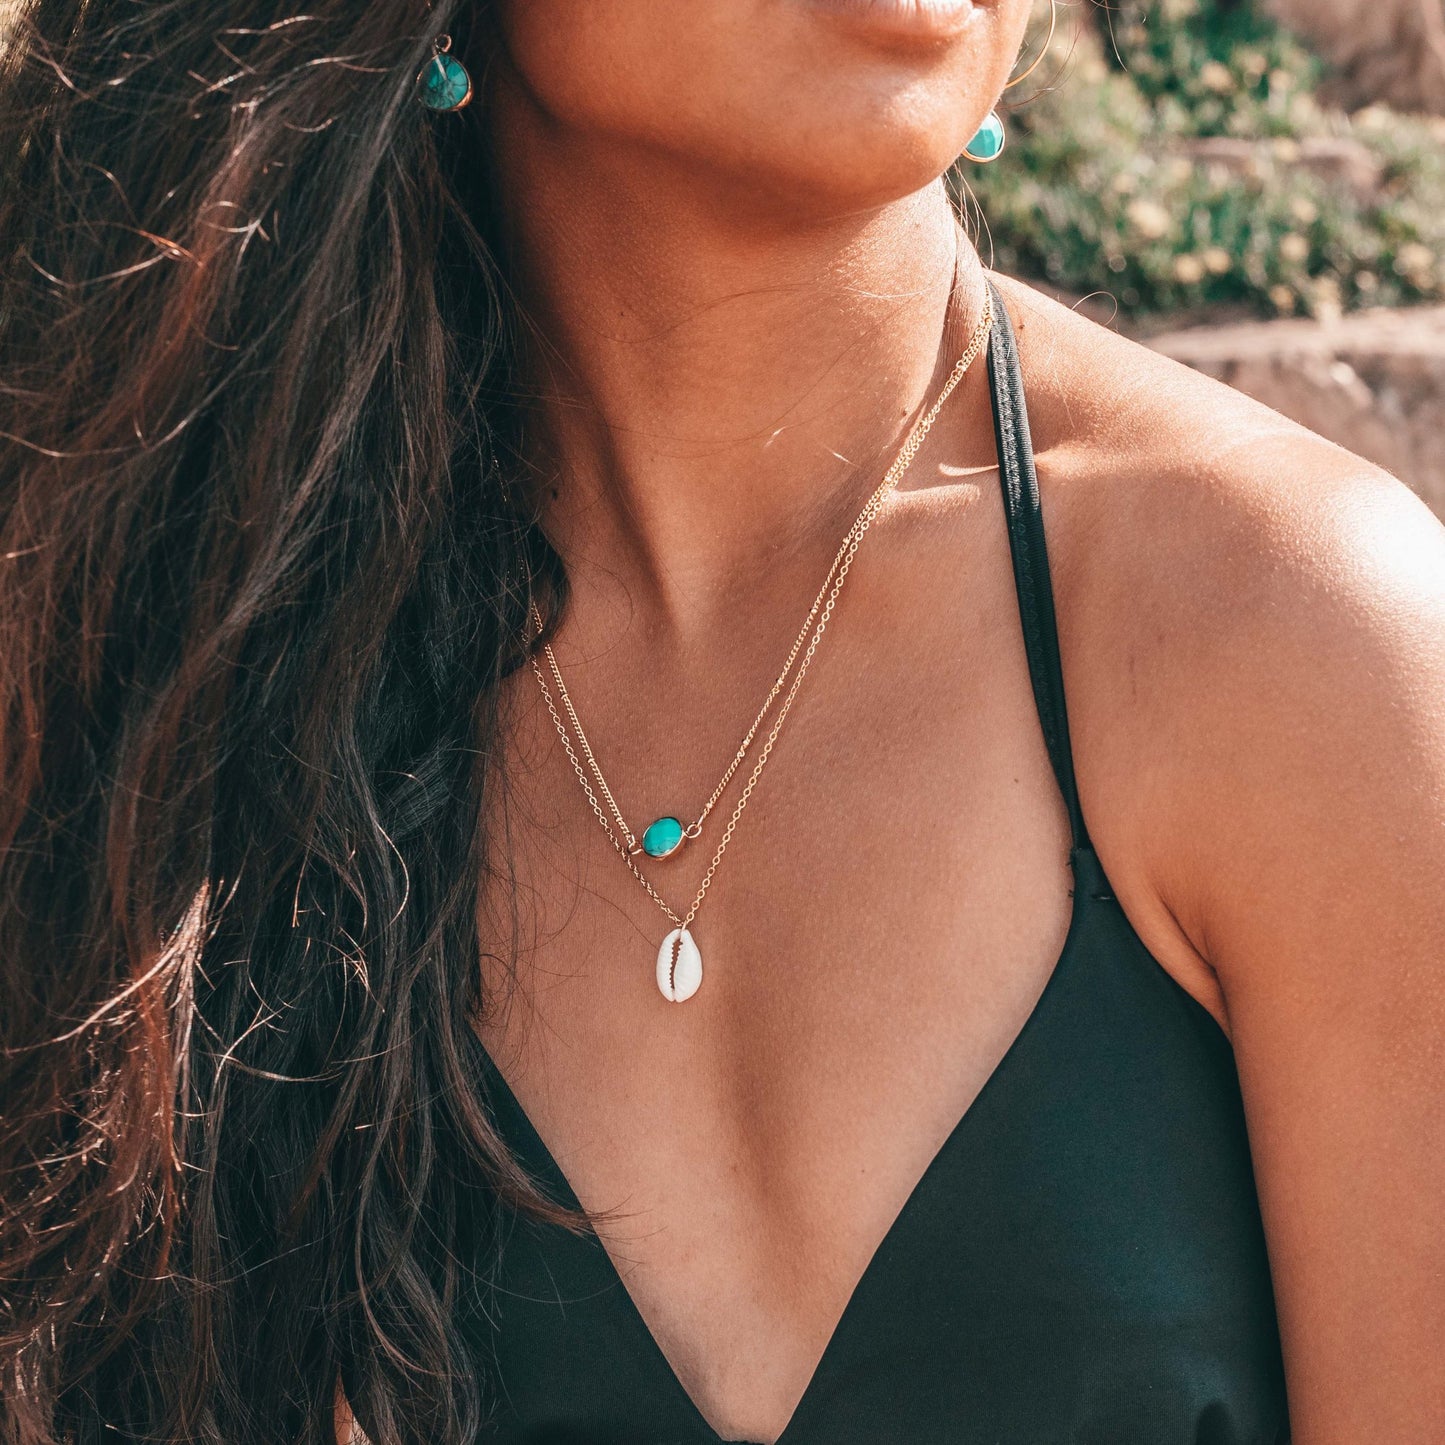 Amisha Gold Necklace - Turquoise Natural Stone